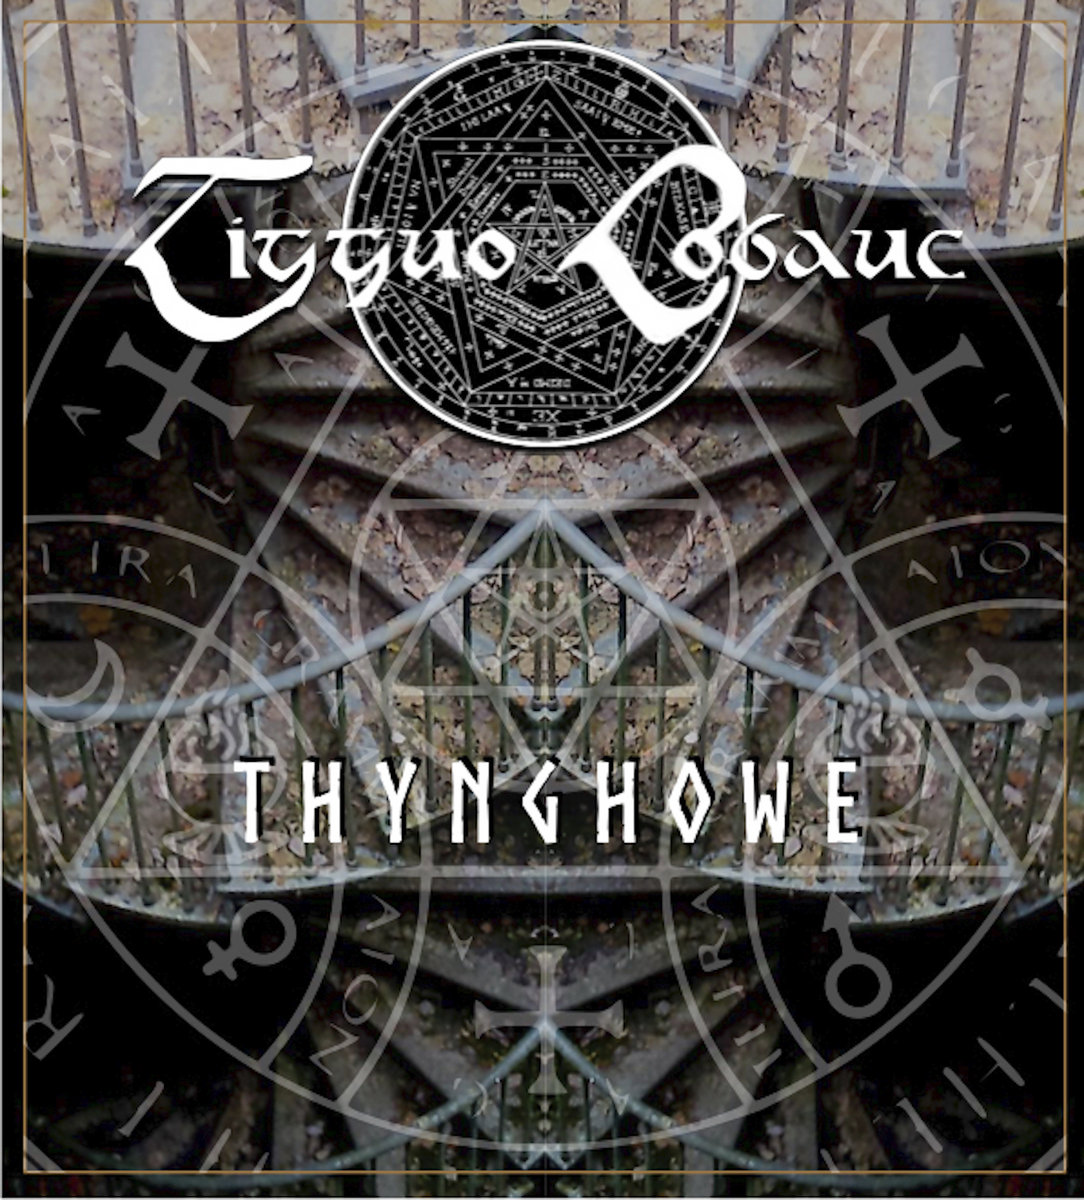 TIGGUO COBAUC - Thynghowe cover 